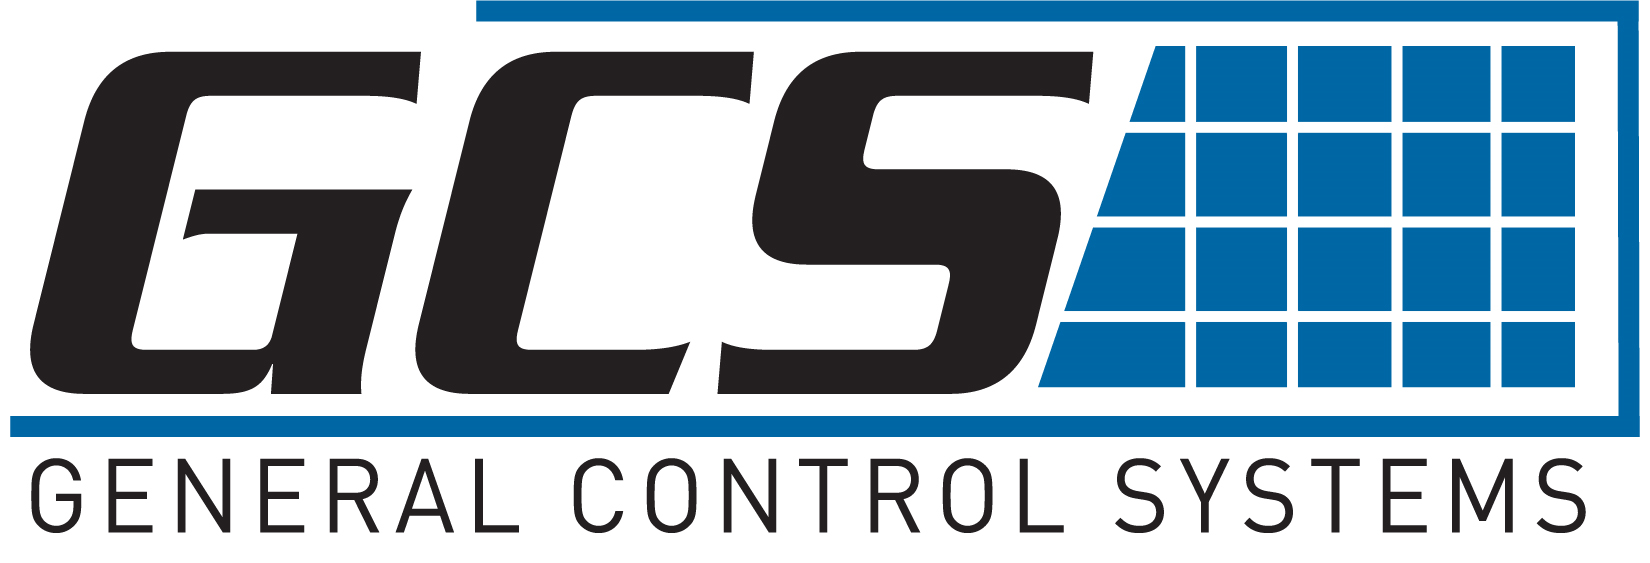 General Control Systems Inc. Company Logo